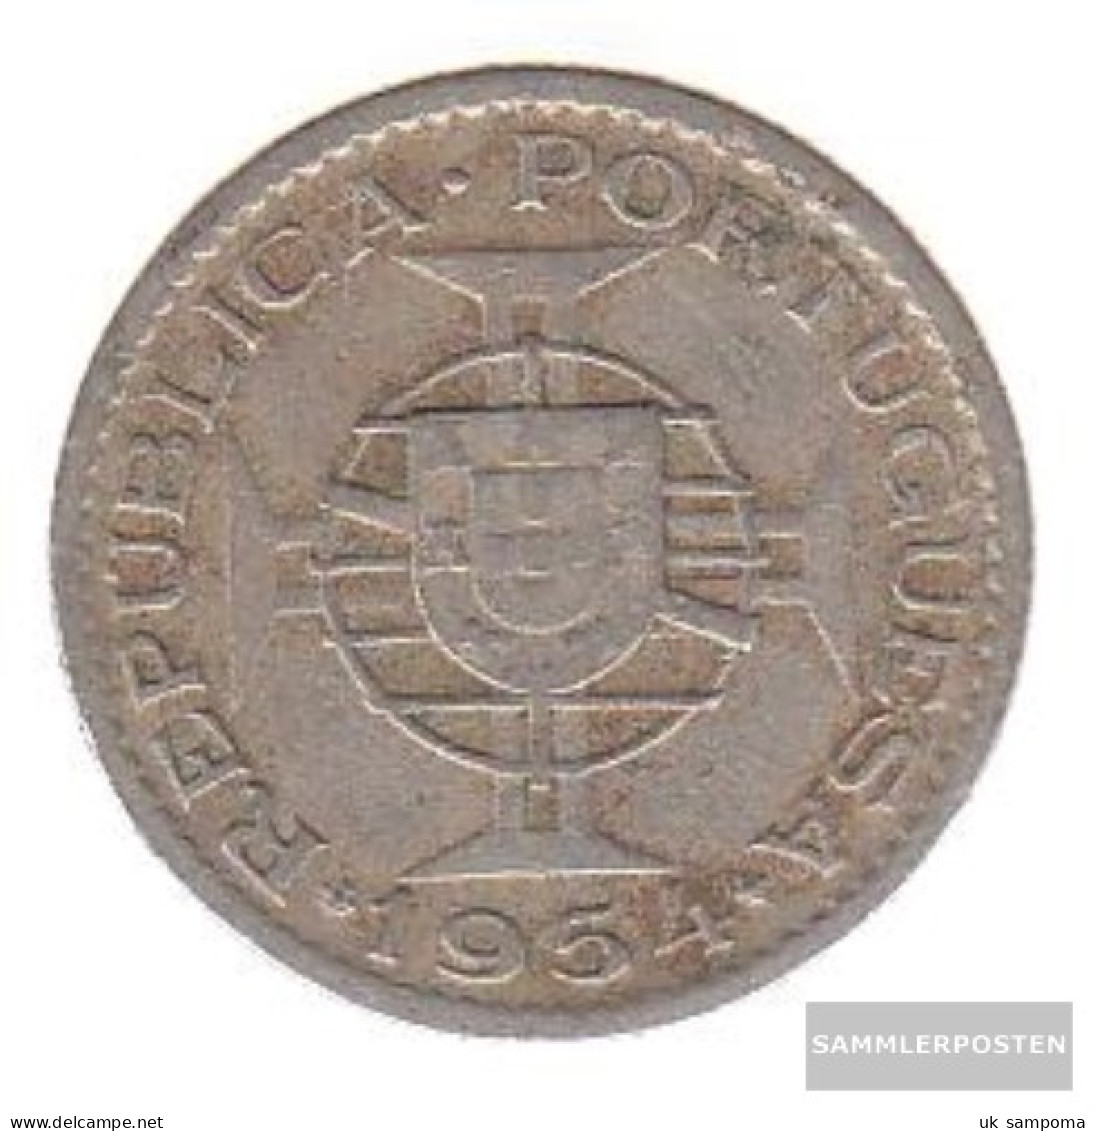 Mosambik Km-number. : 78 1953 Very Fine Copper-Nickel Very Fine 1953 2 1/2 Escudos Crest - Mozambique